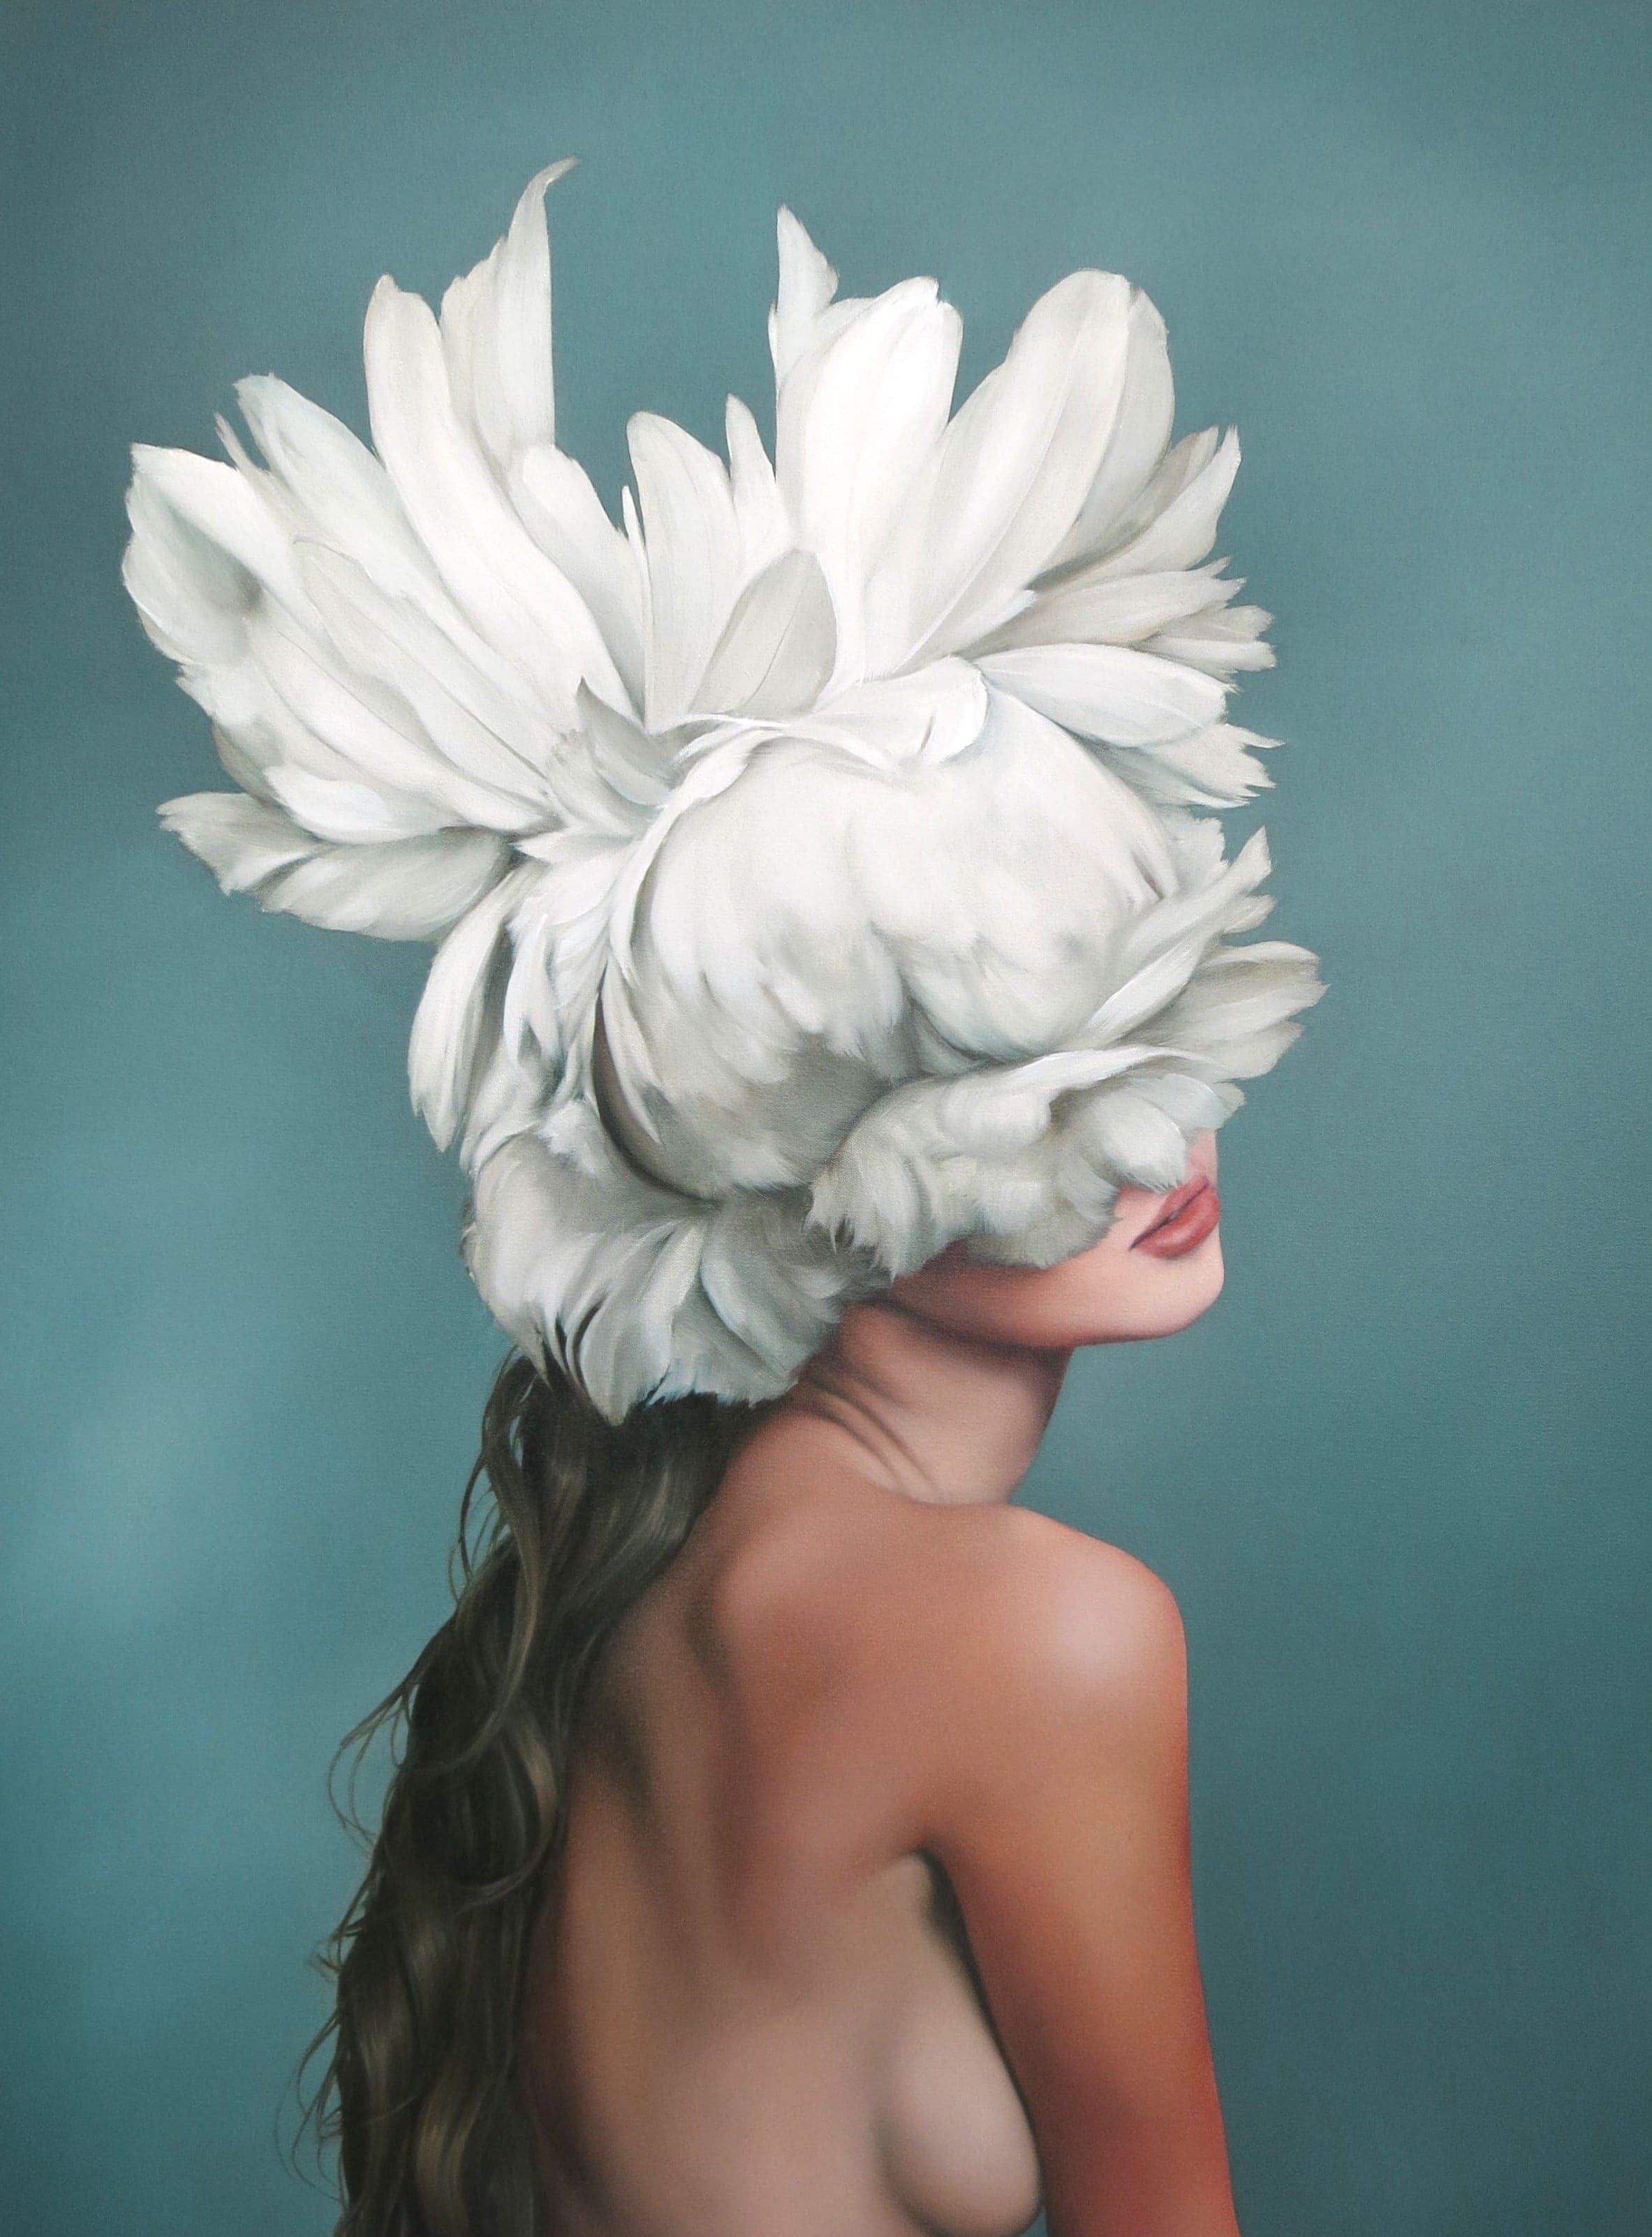 A Flower head girl